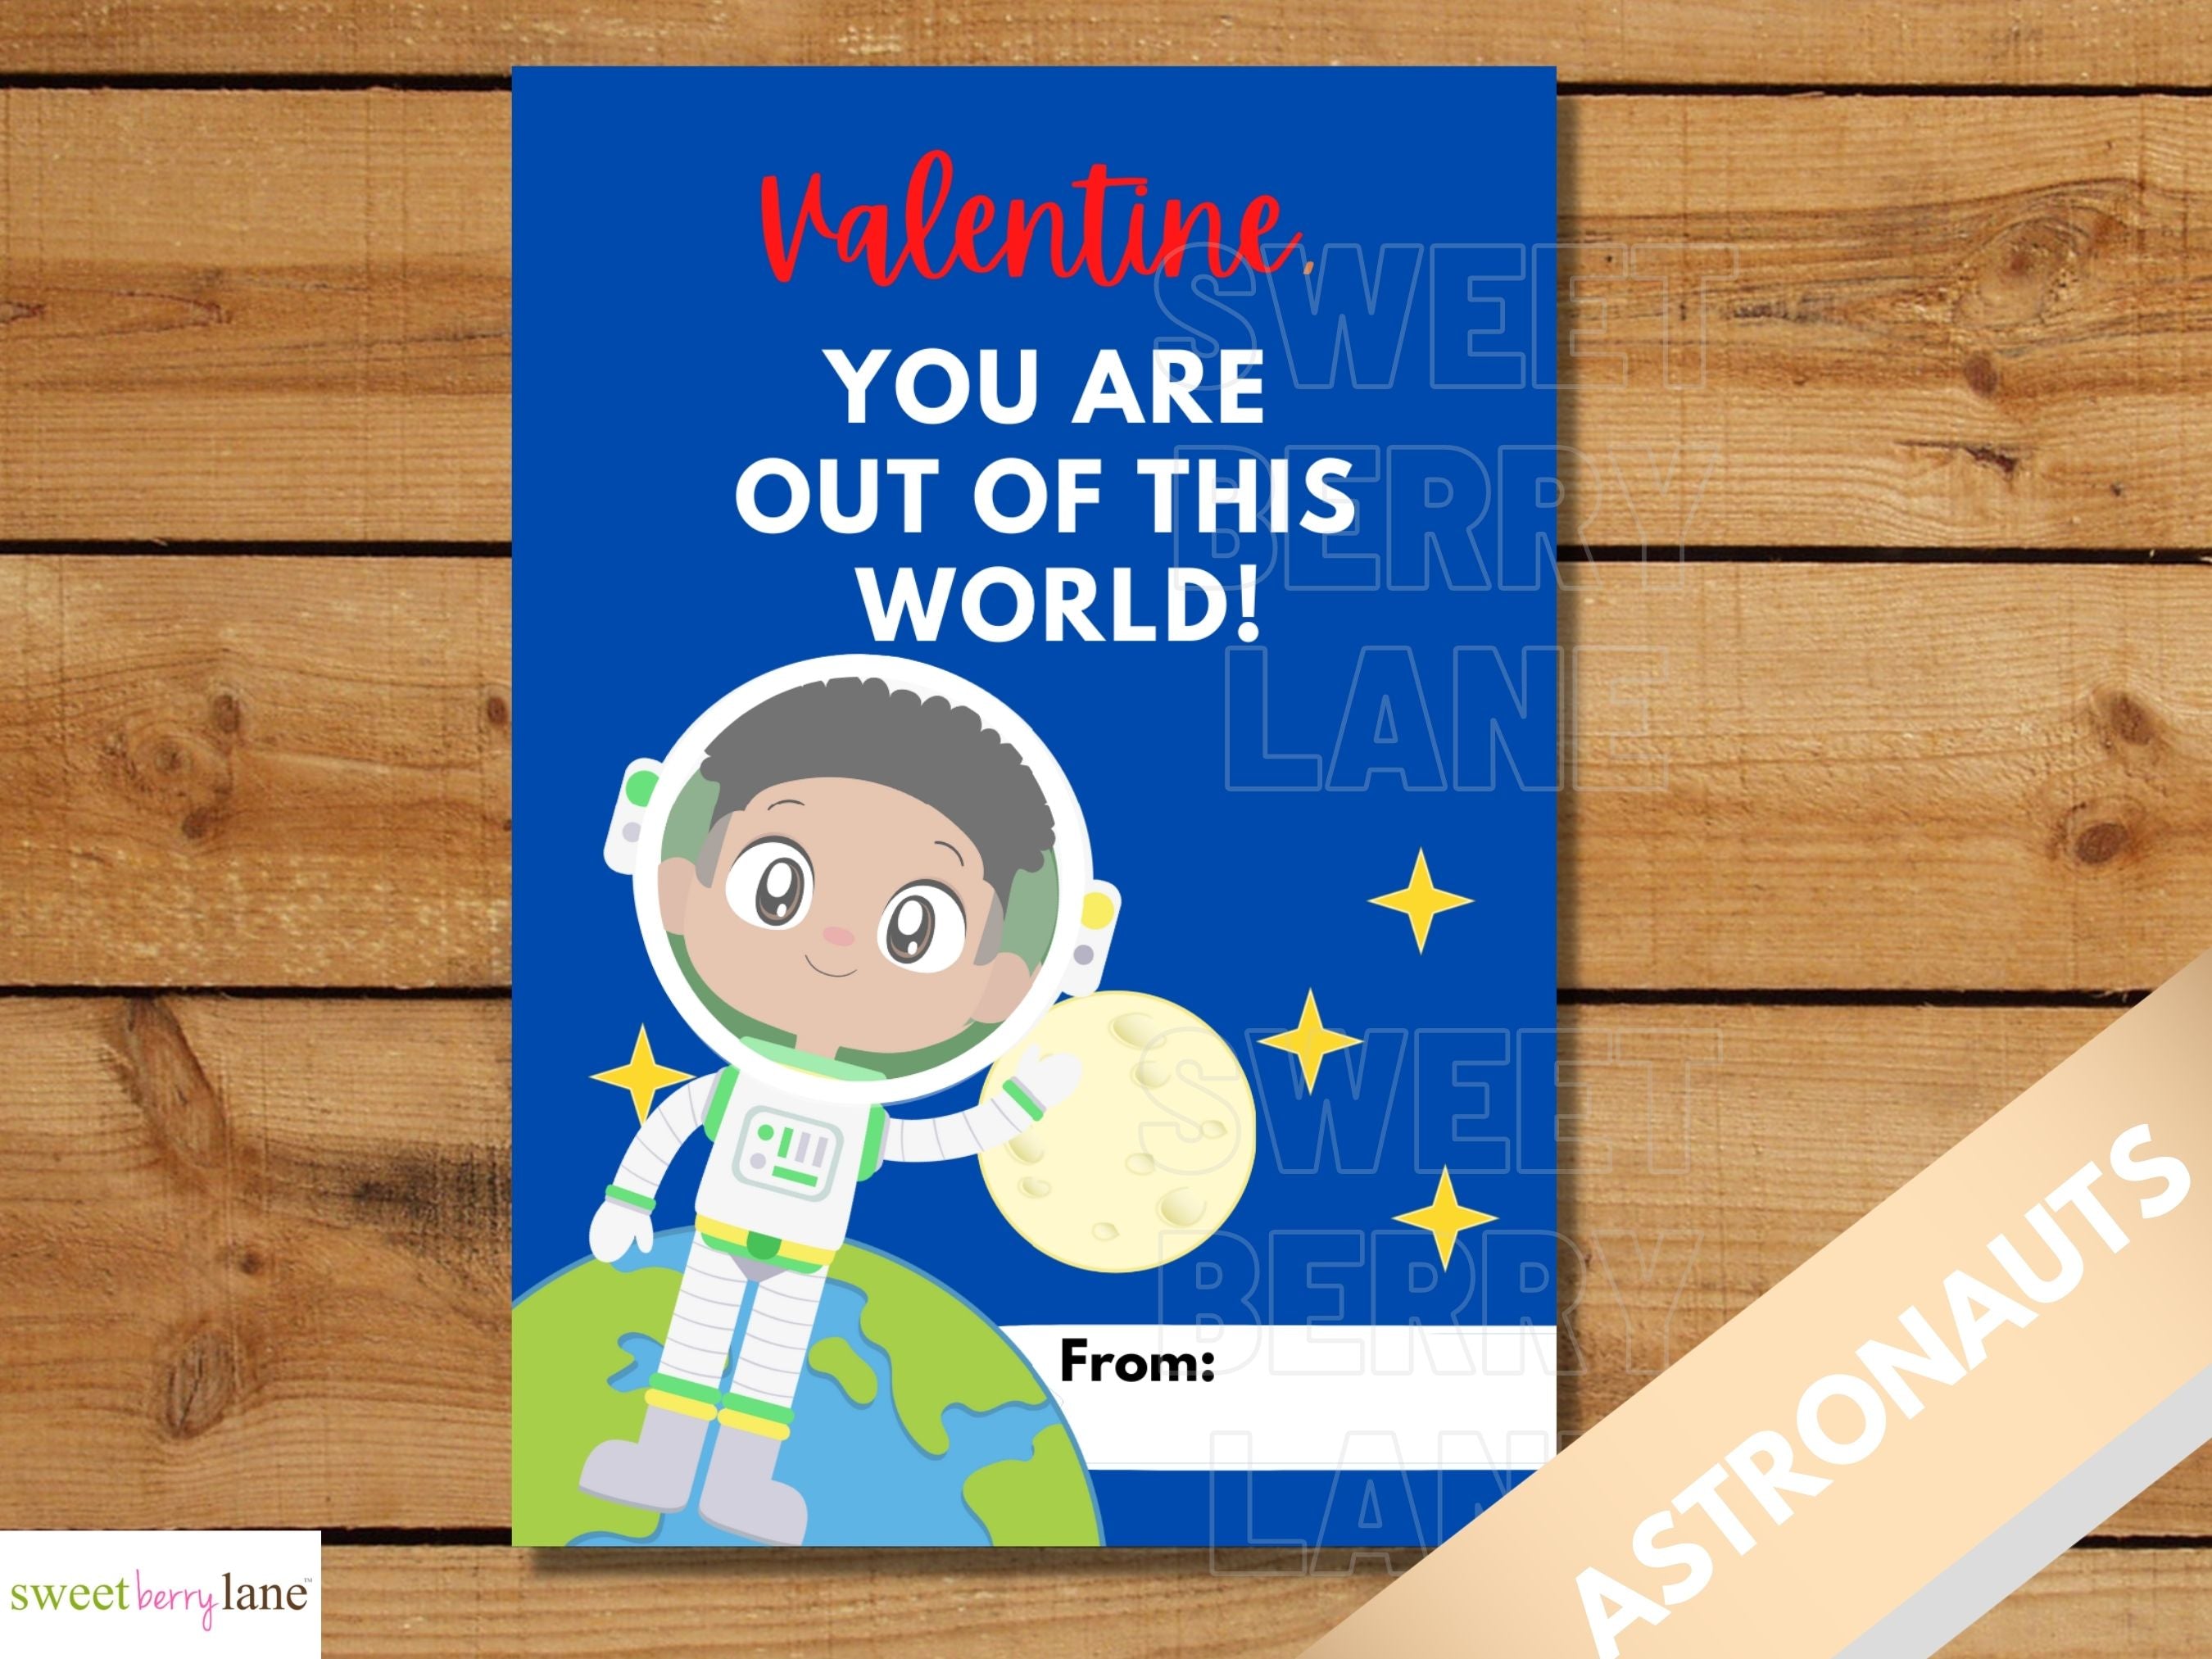 Astronaut Boys- School Valentines Day Cards